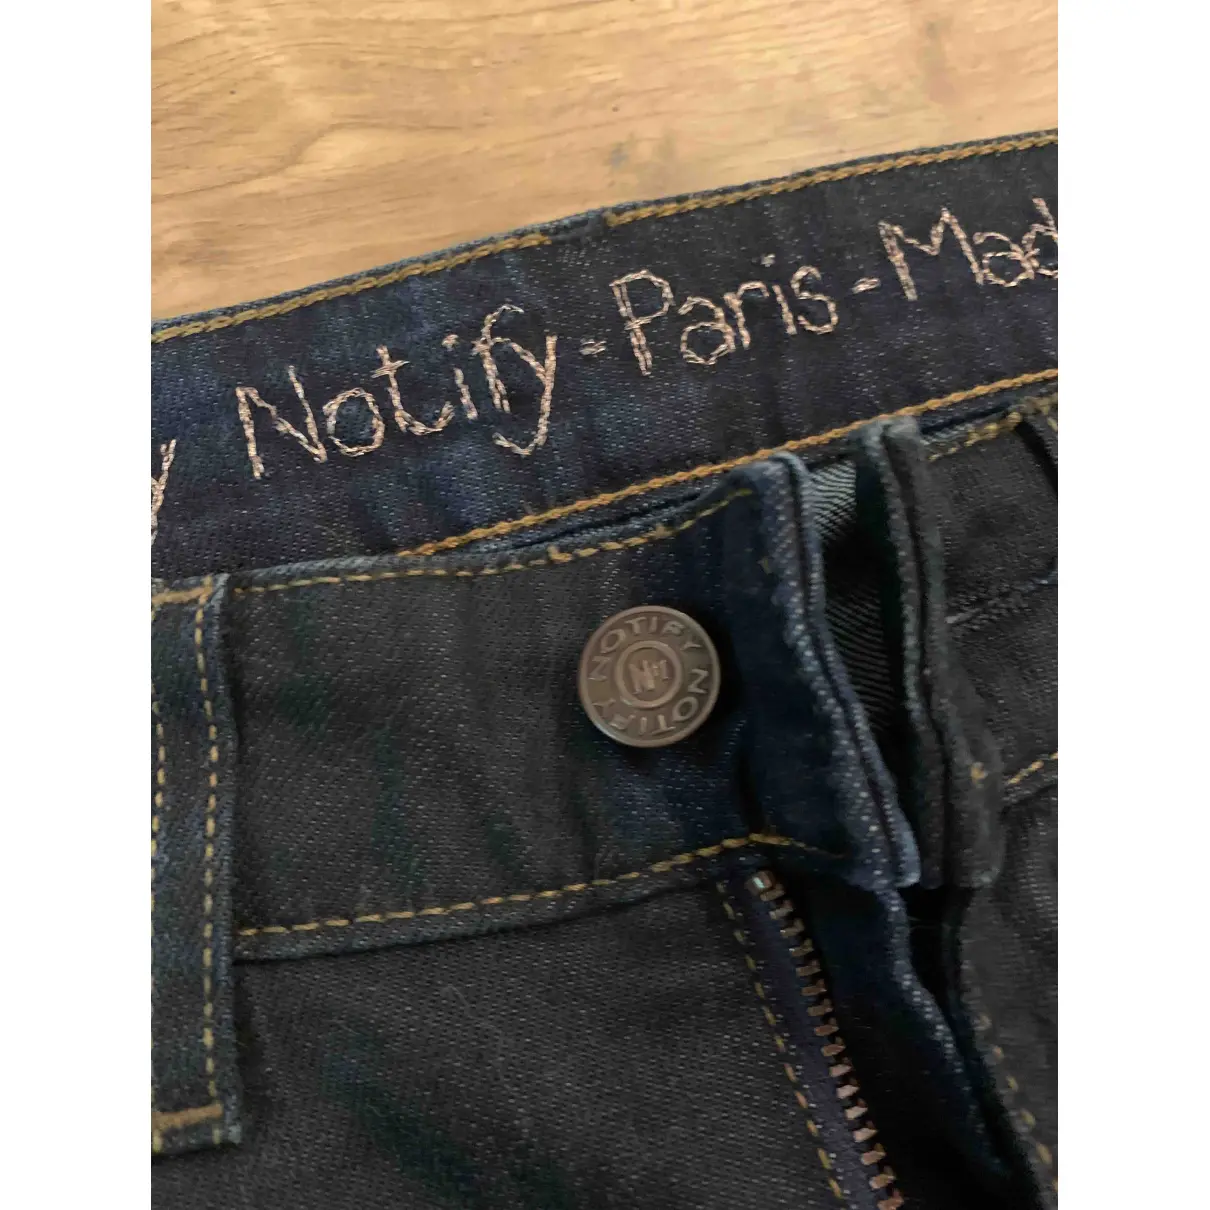 Slim jeans Notify